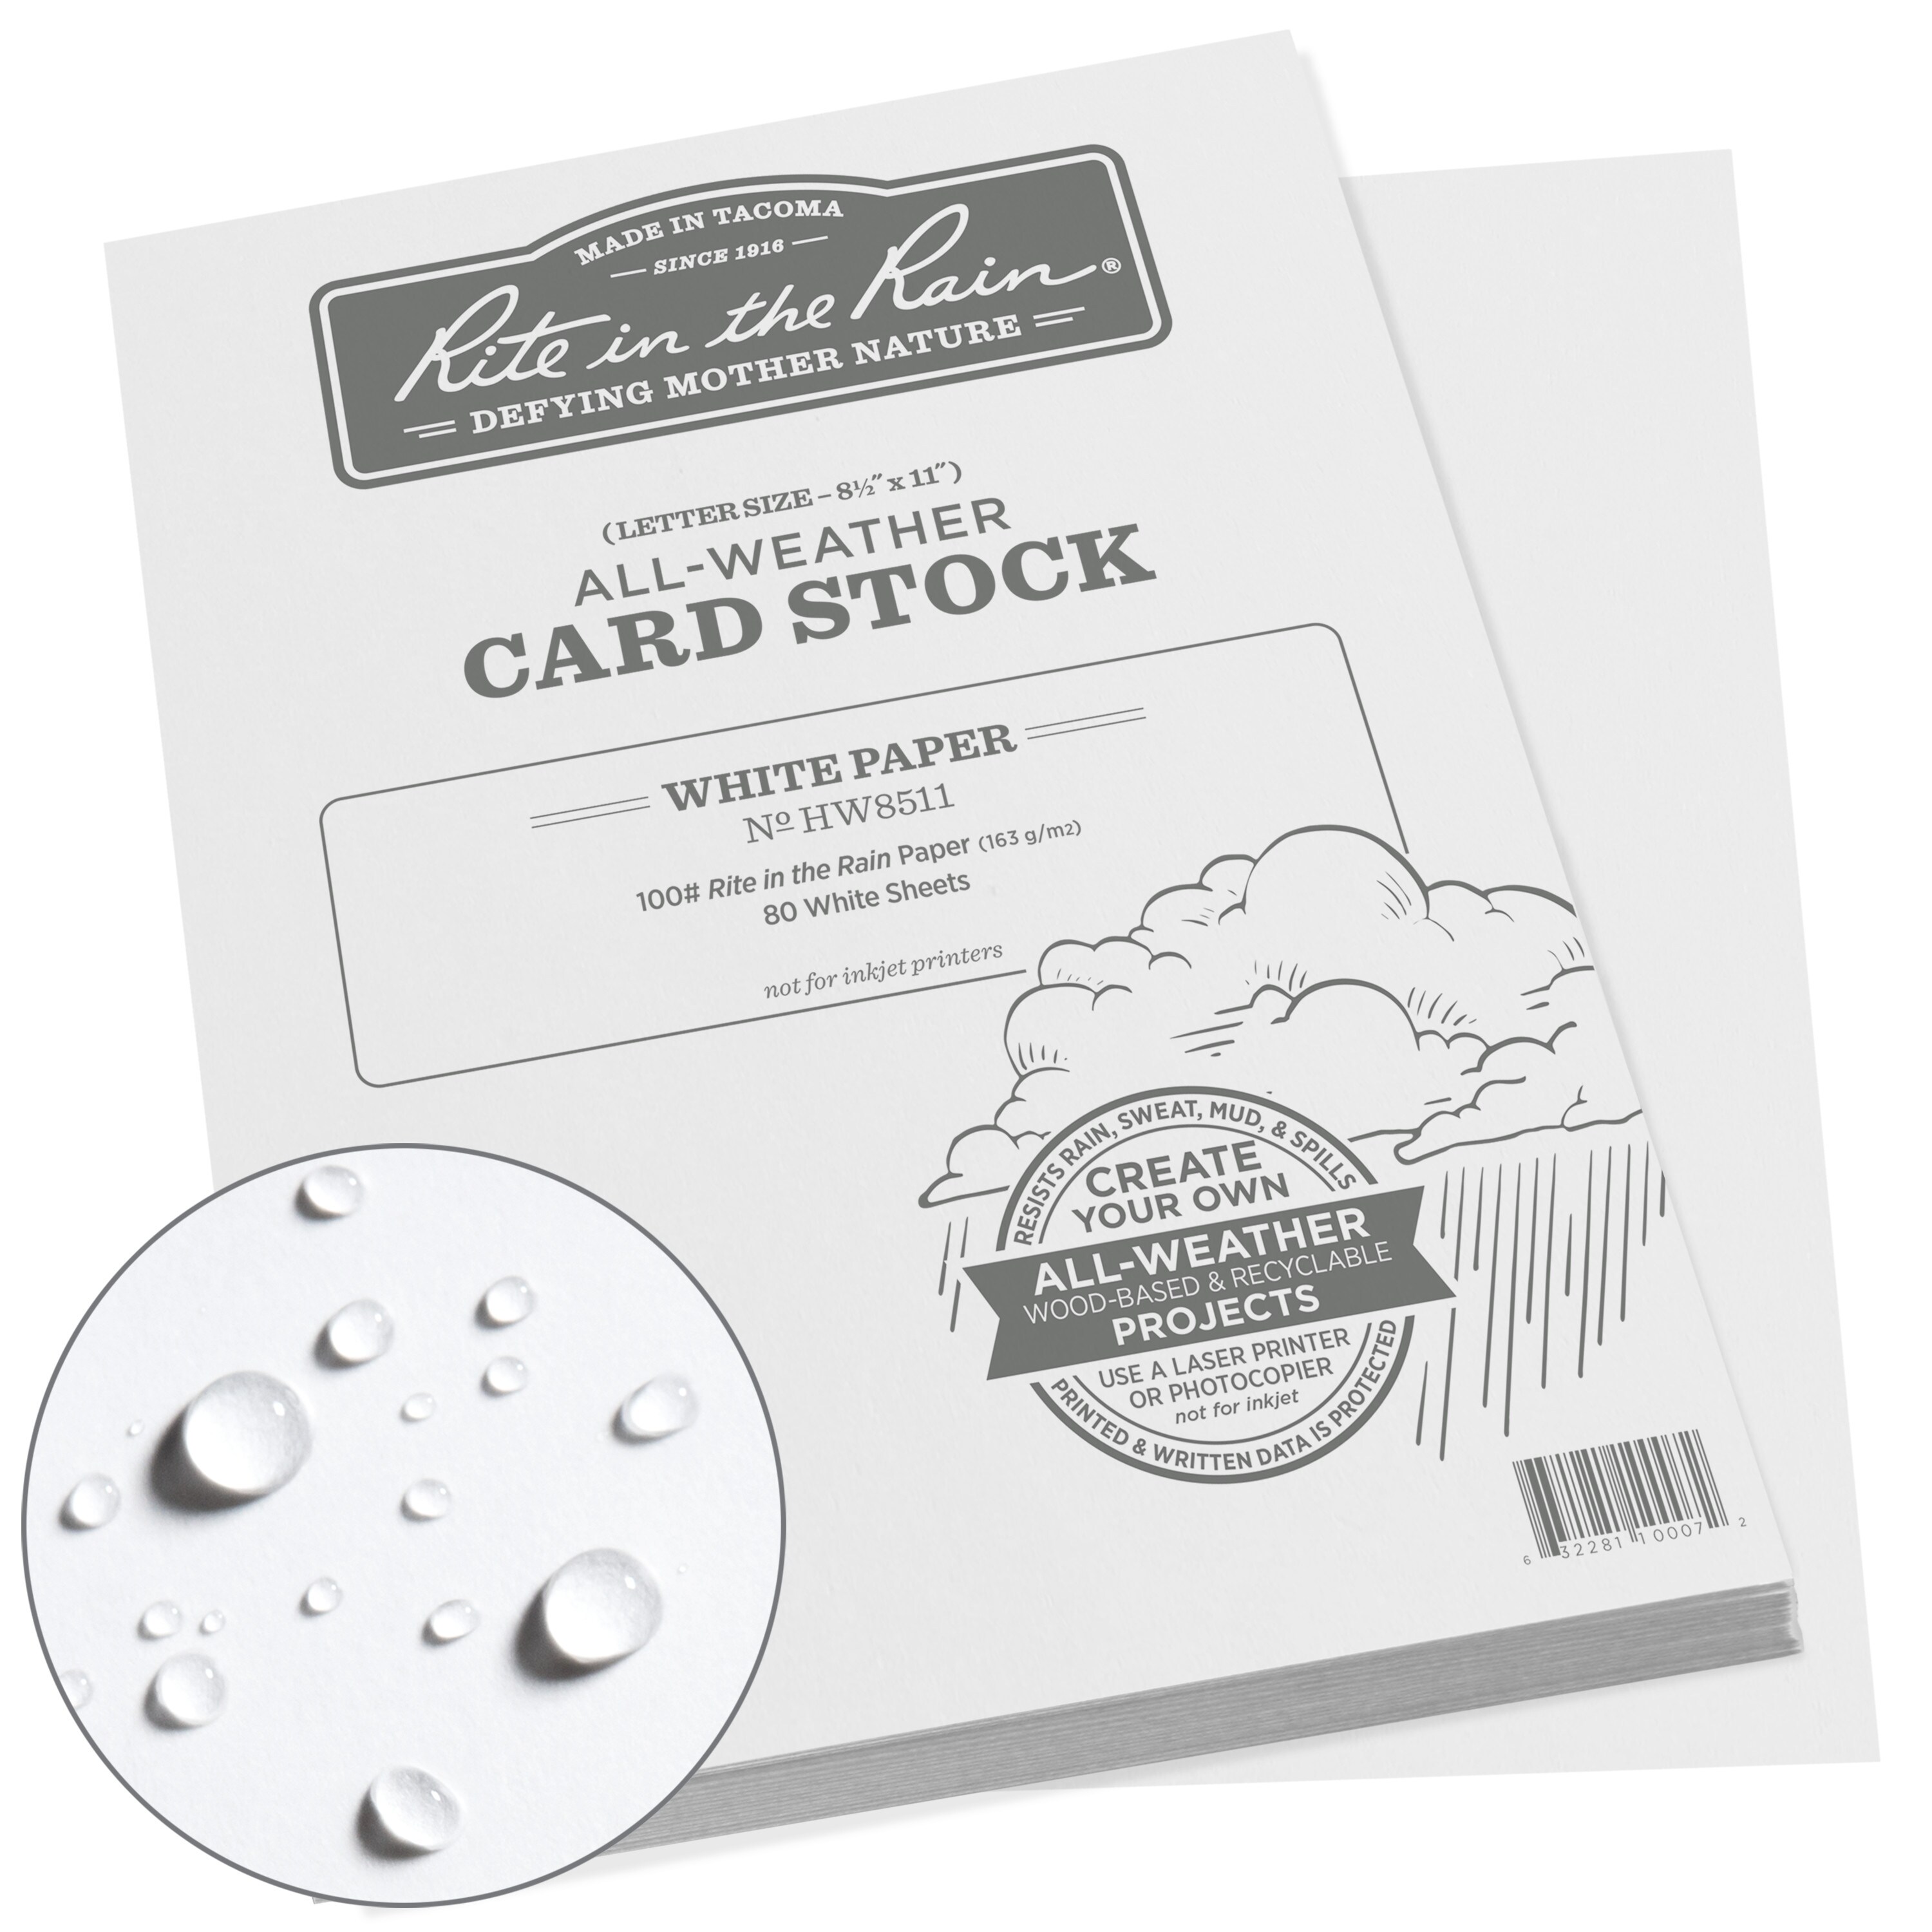 Jam Paper Metallic Cardstock, 8.5 x 11, 110 lb Stardream Metallic Opal Ivory, 50 Sheets/Pack